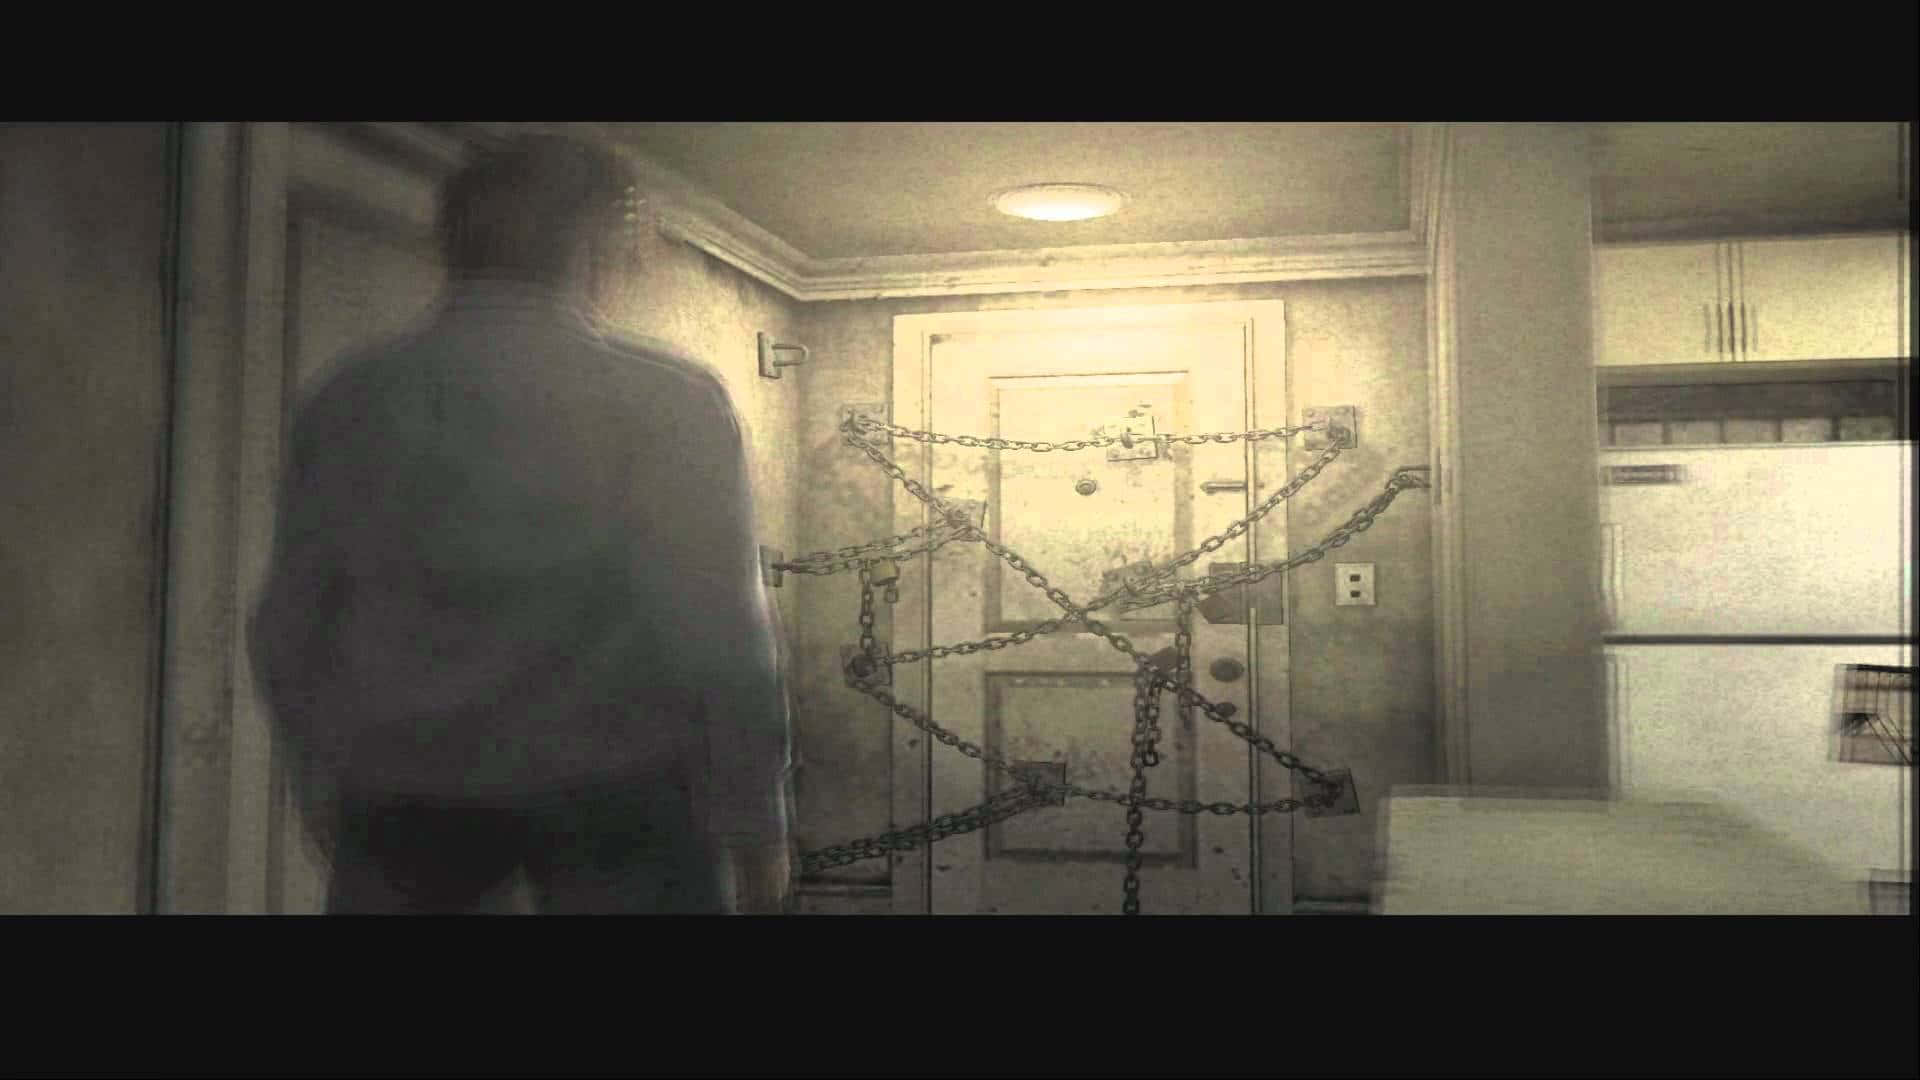 Download Fundo De Silent Hill Wallpaper